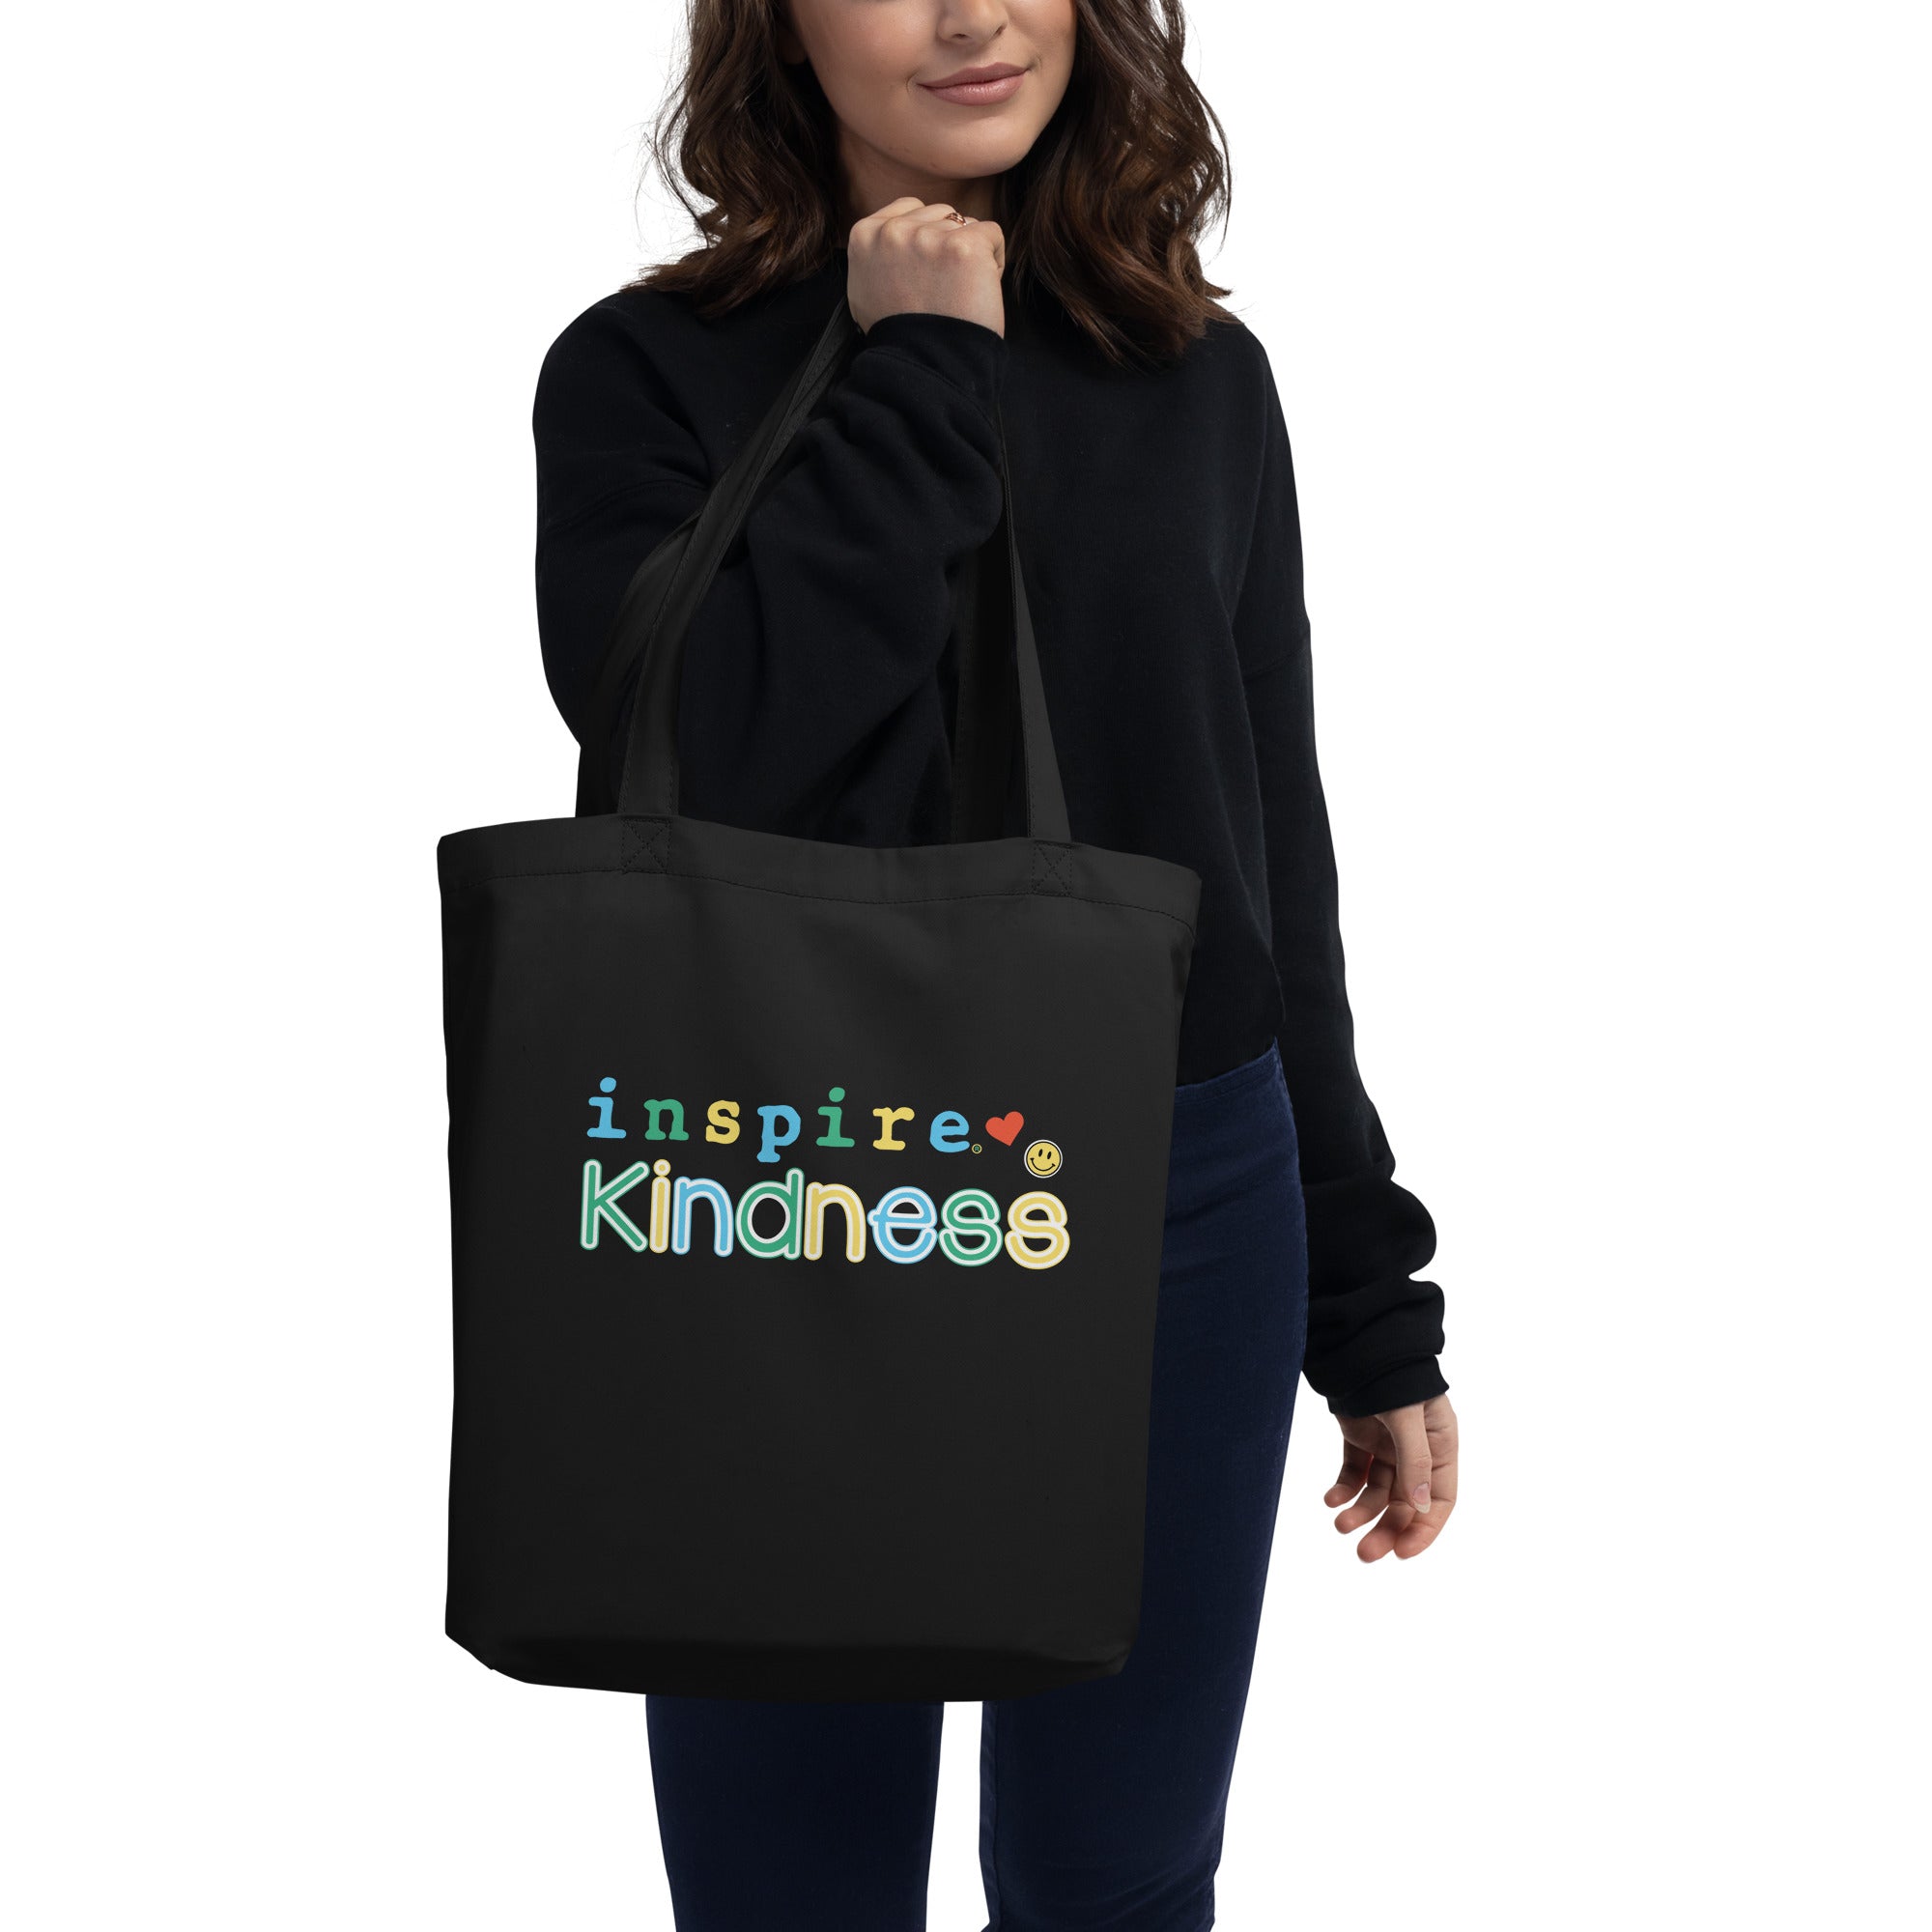 inspire Kindness Eco Tote Bag